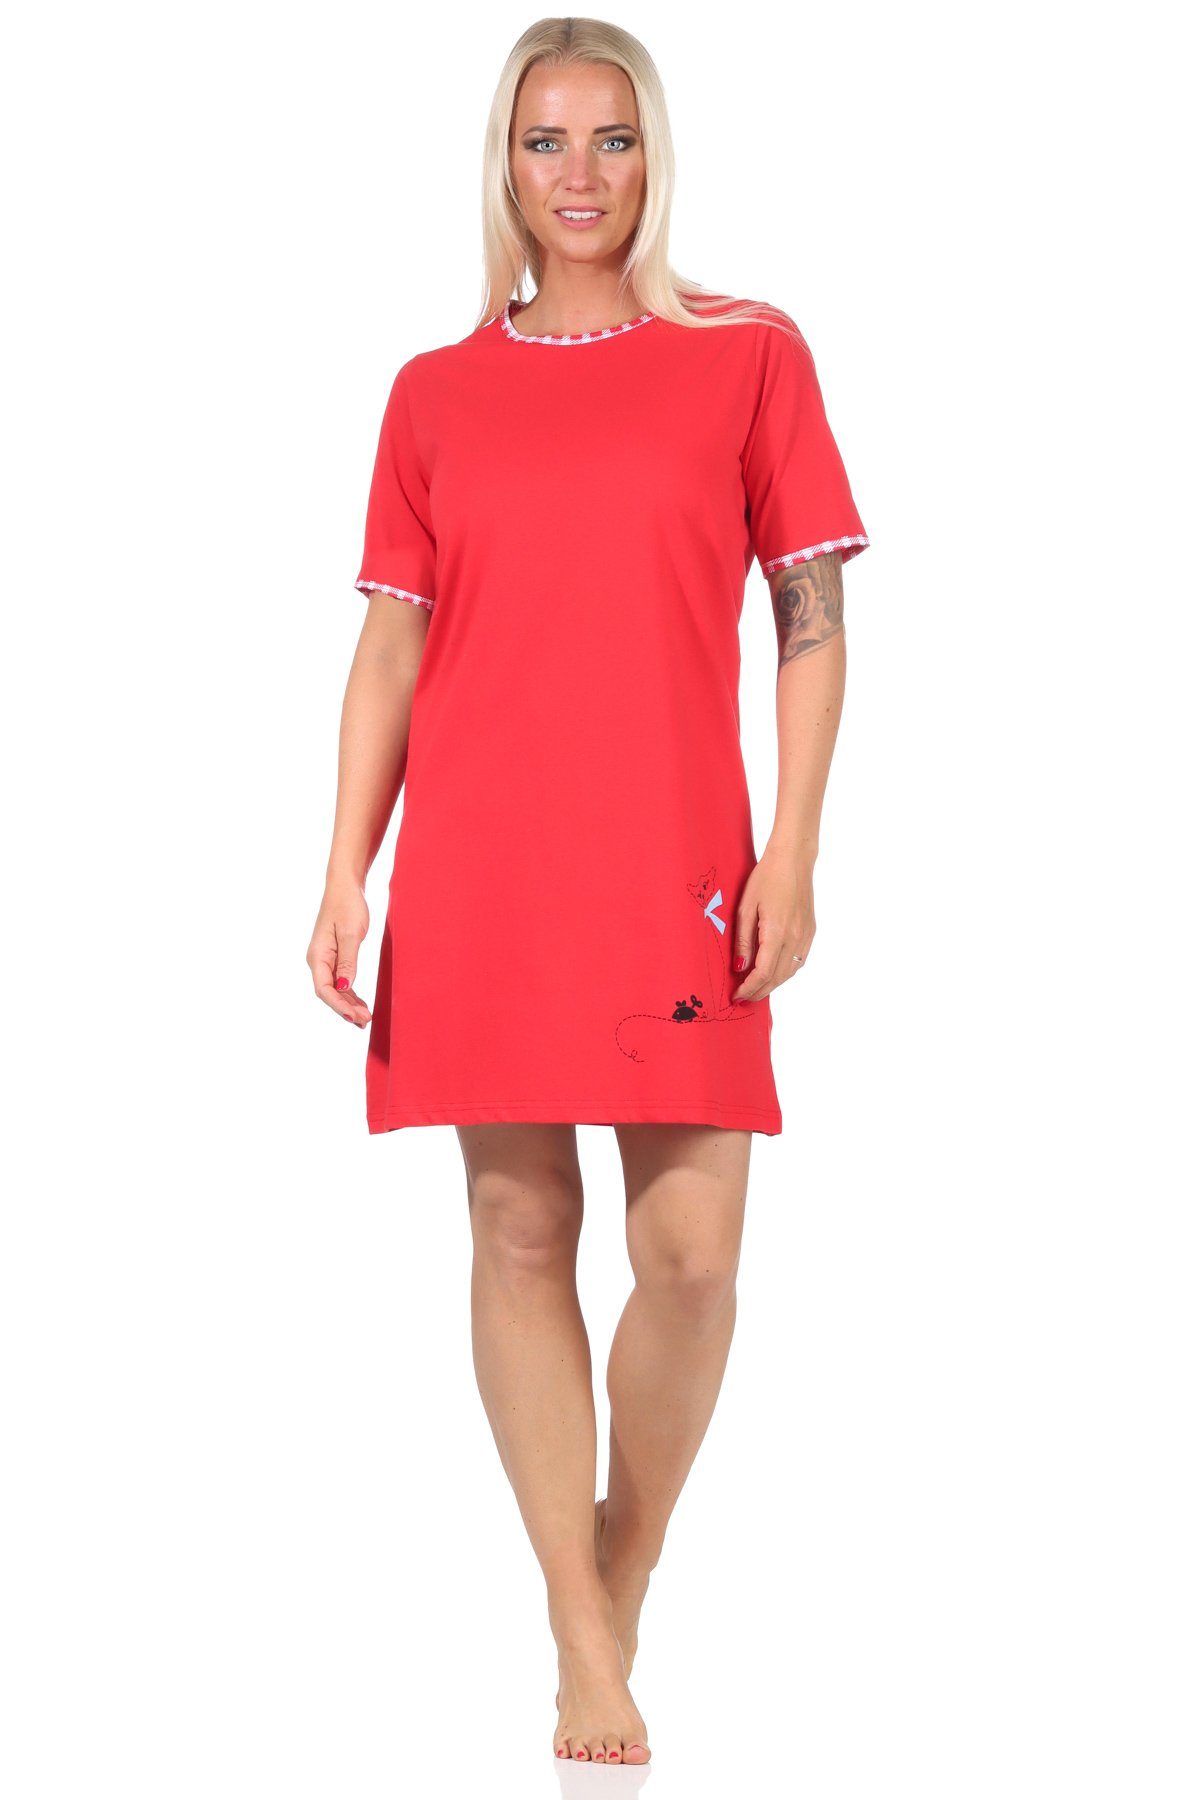 Normann Nachthemd Damen Nachthemd, kurzes Bigshirt mit süßer Katzen-Applikation - 66335 rot | Nachthemden